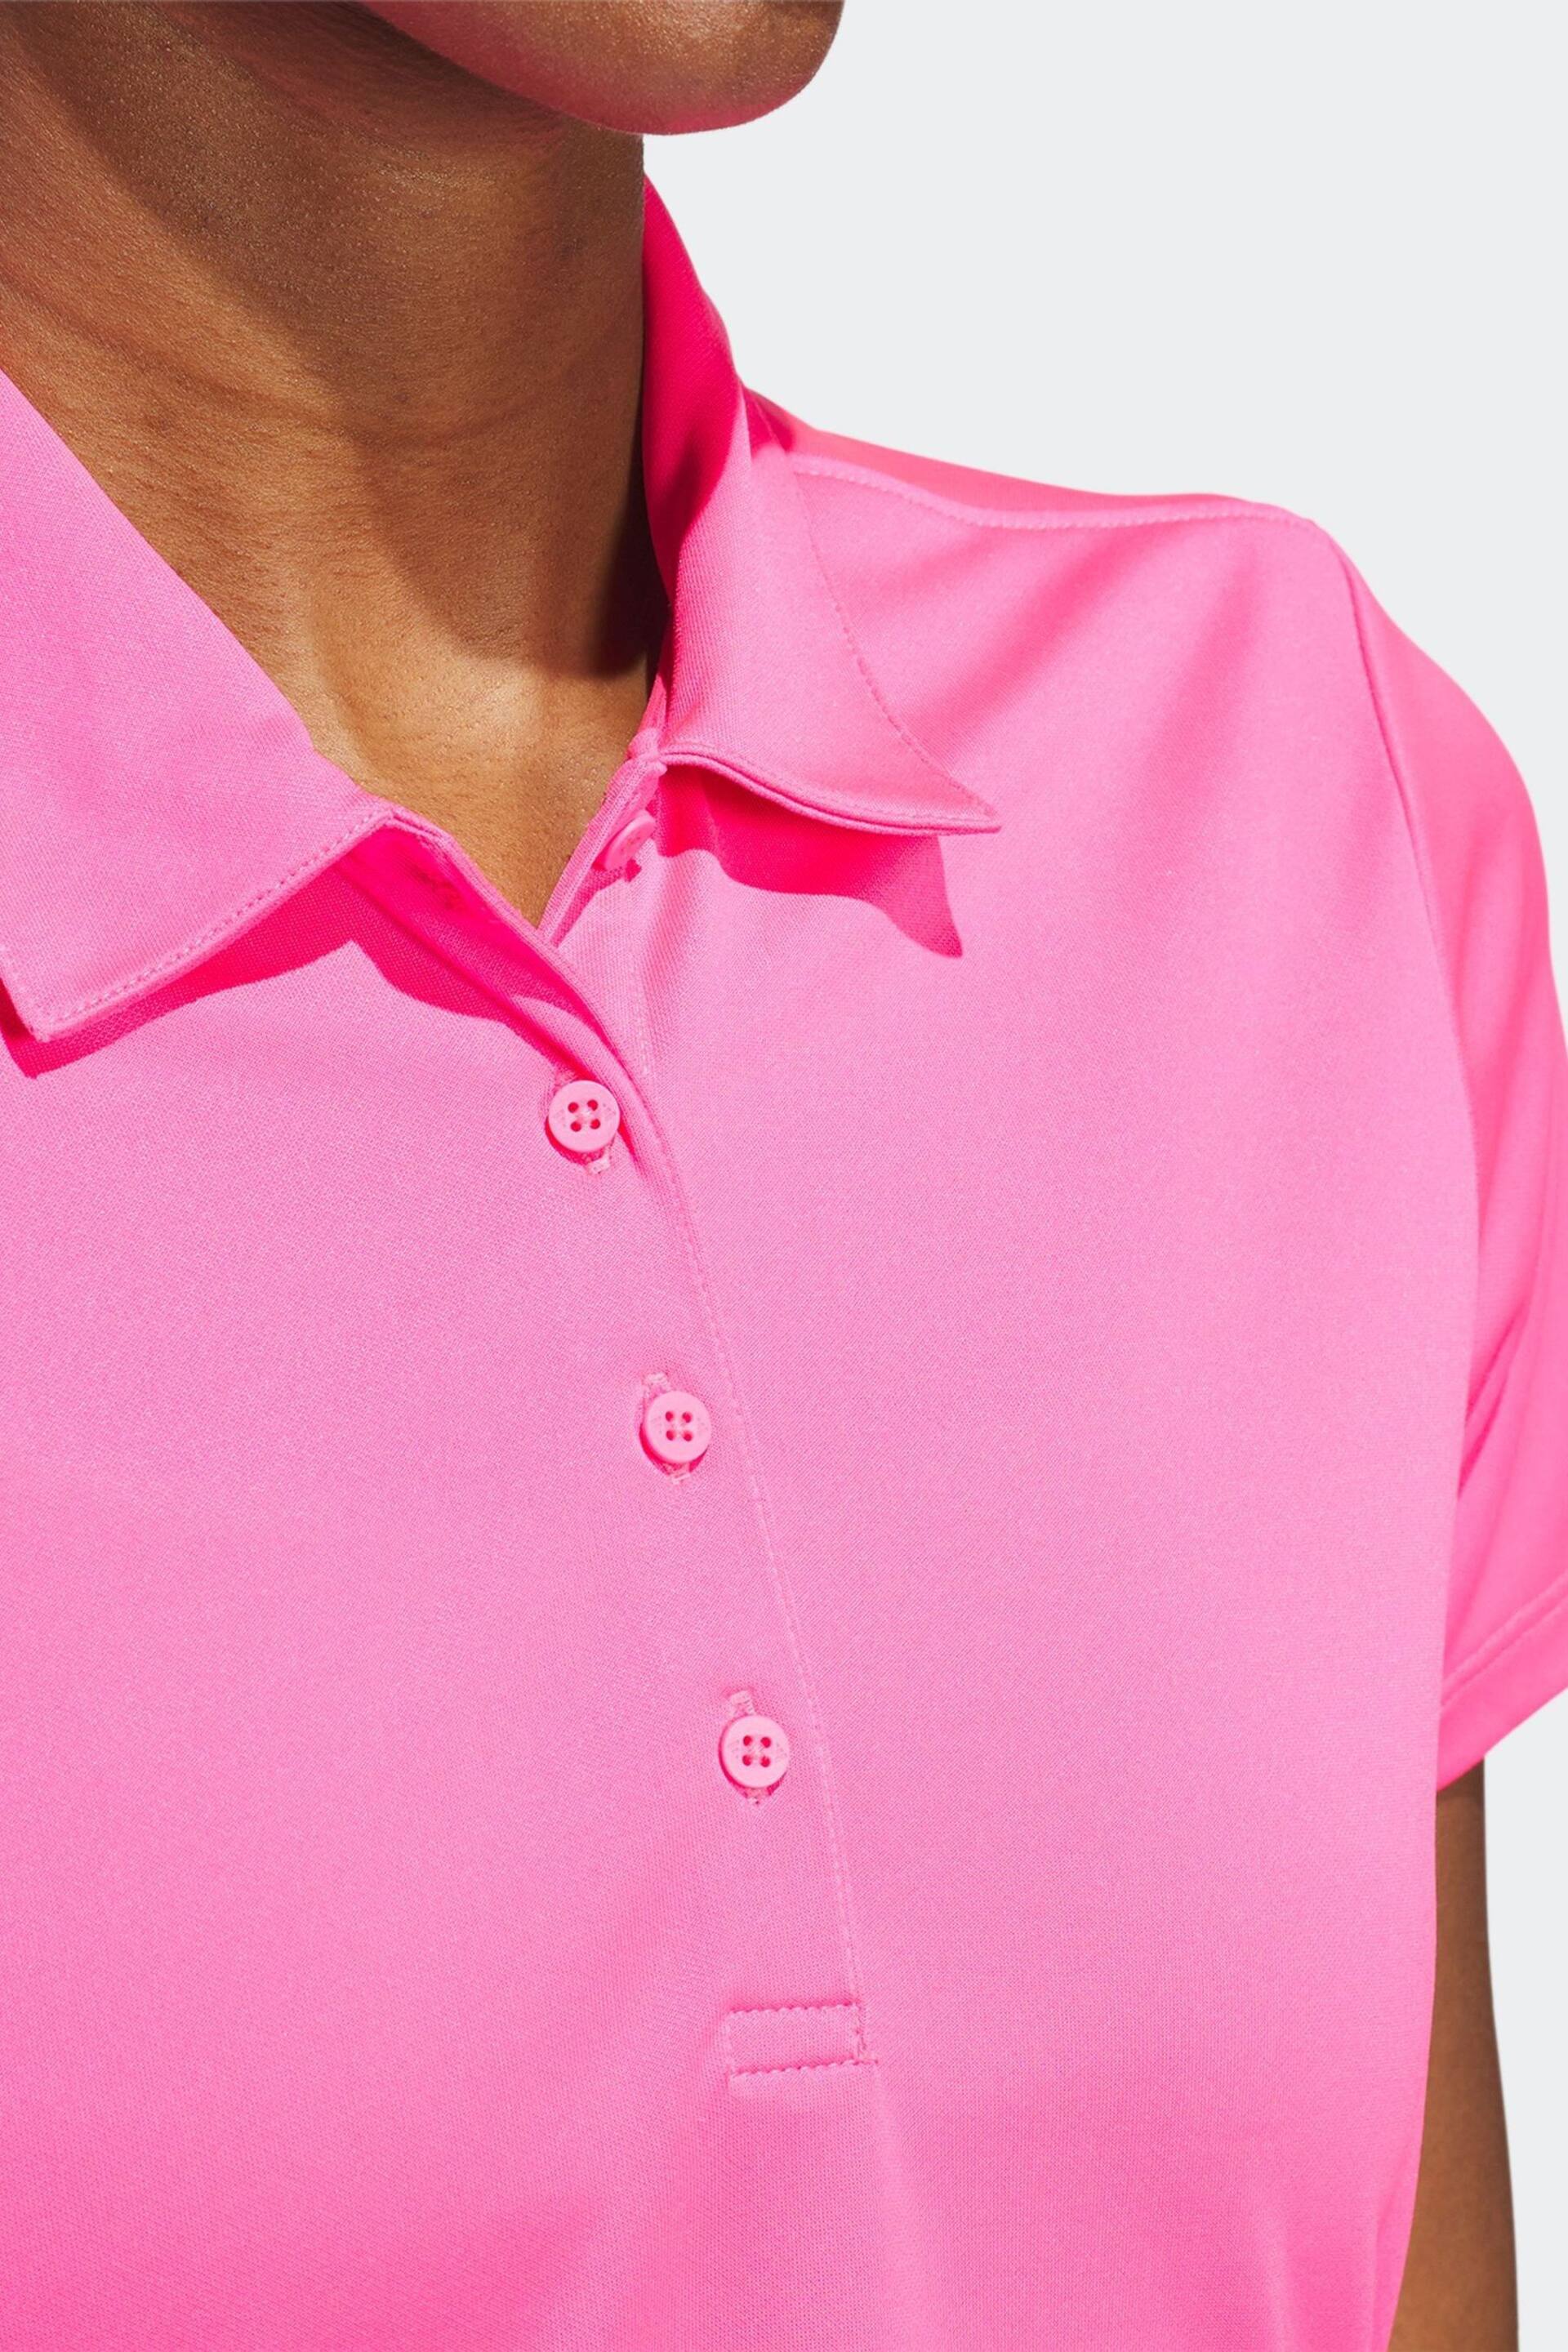 adidas Golf Womens Solid Short Sleeve Polo Shirt - Image 4 of 6